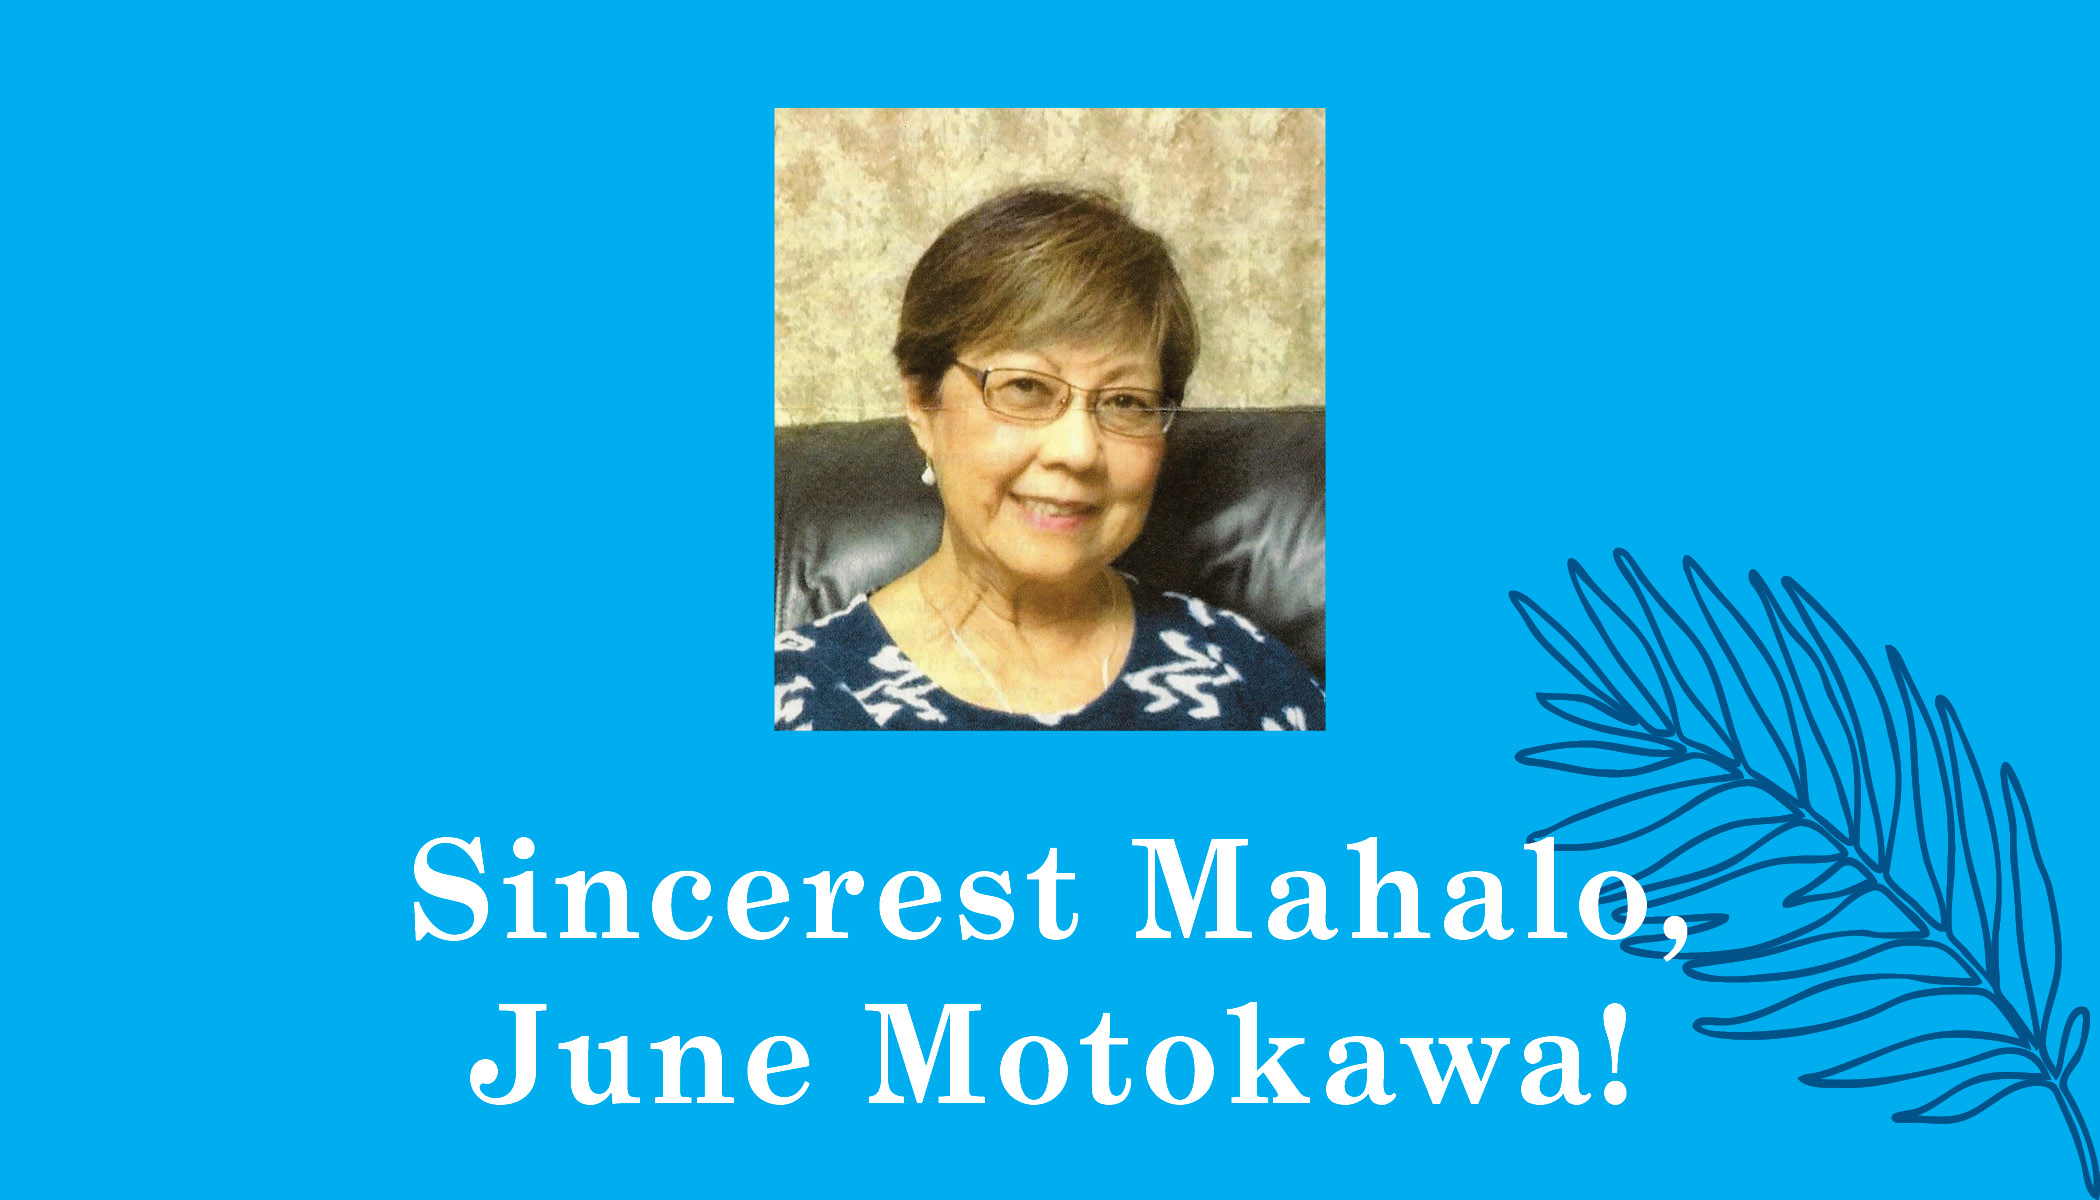 Sincerest Mahalo, June Motokawa!